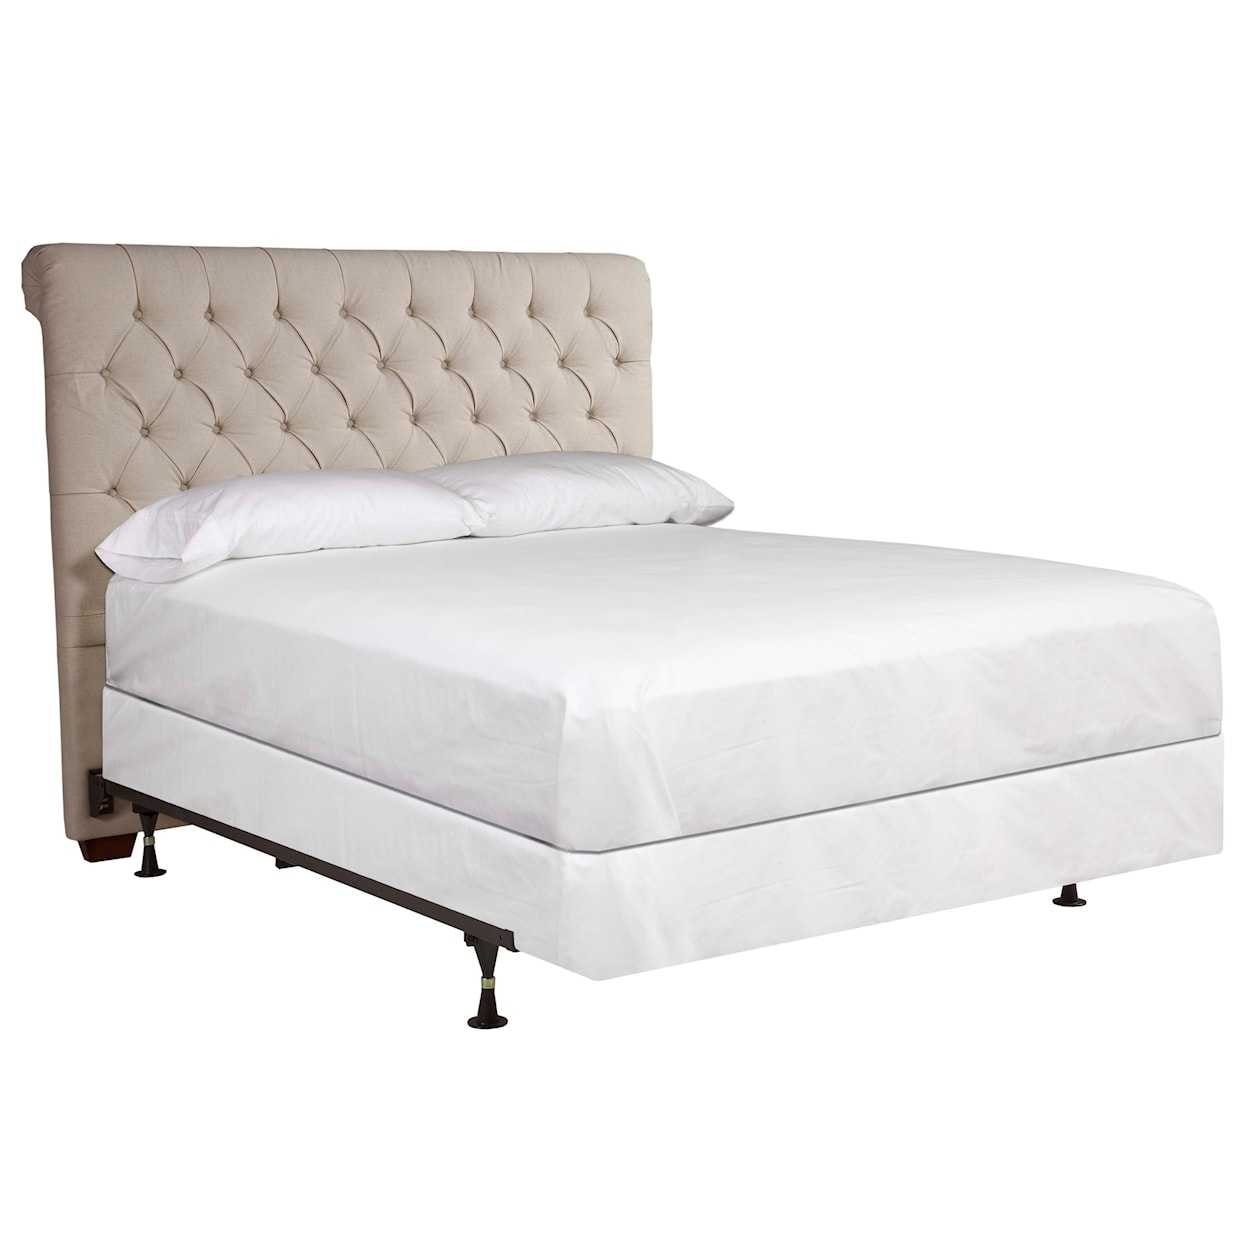 Kincaid Furniture Upholstered Beds Belmar King Headboard